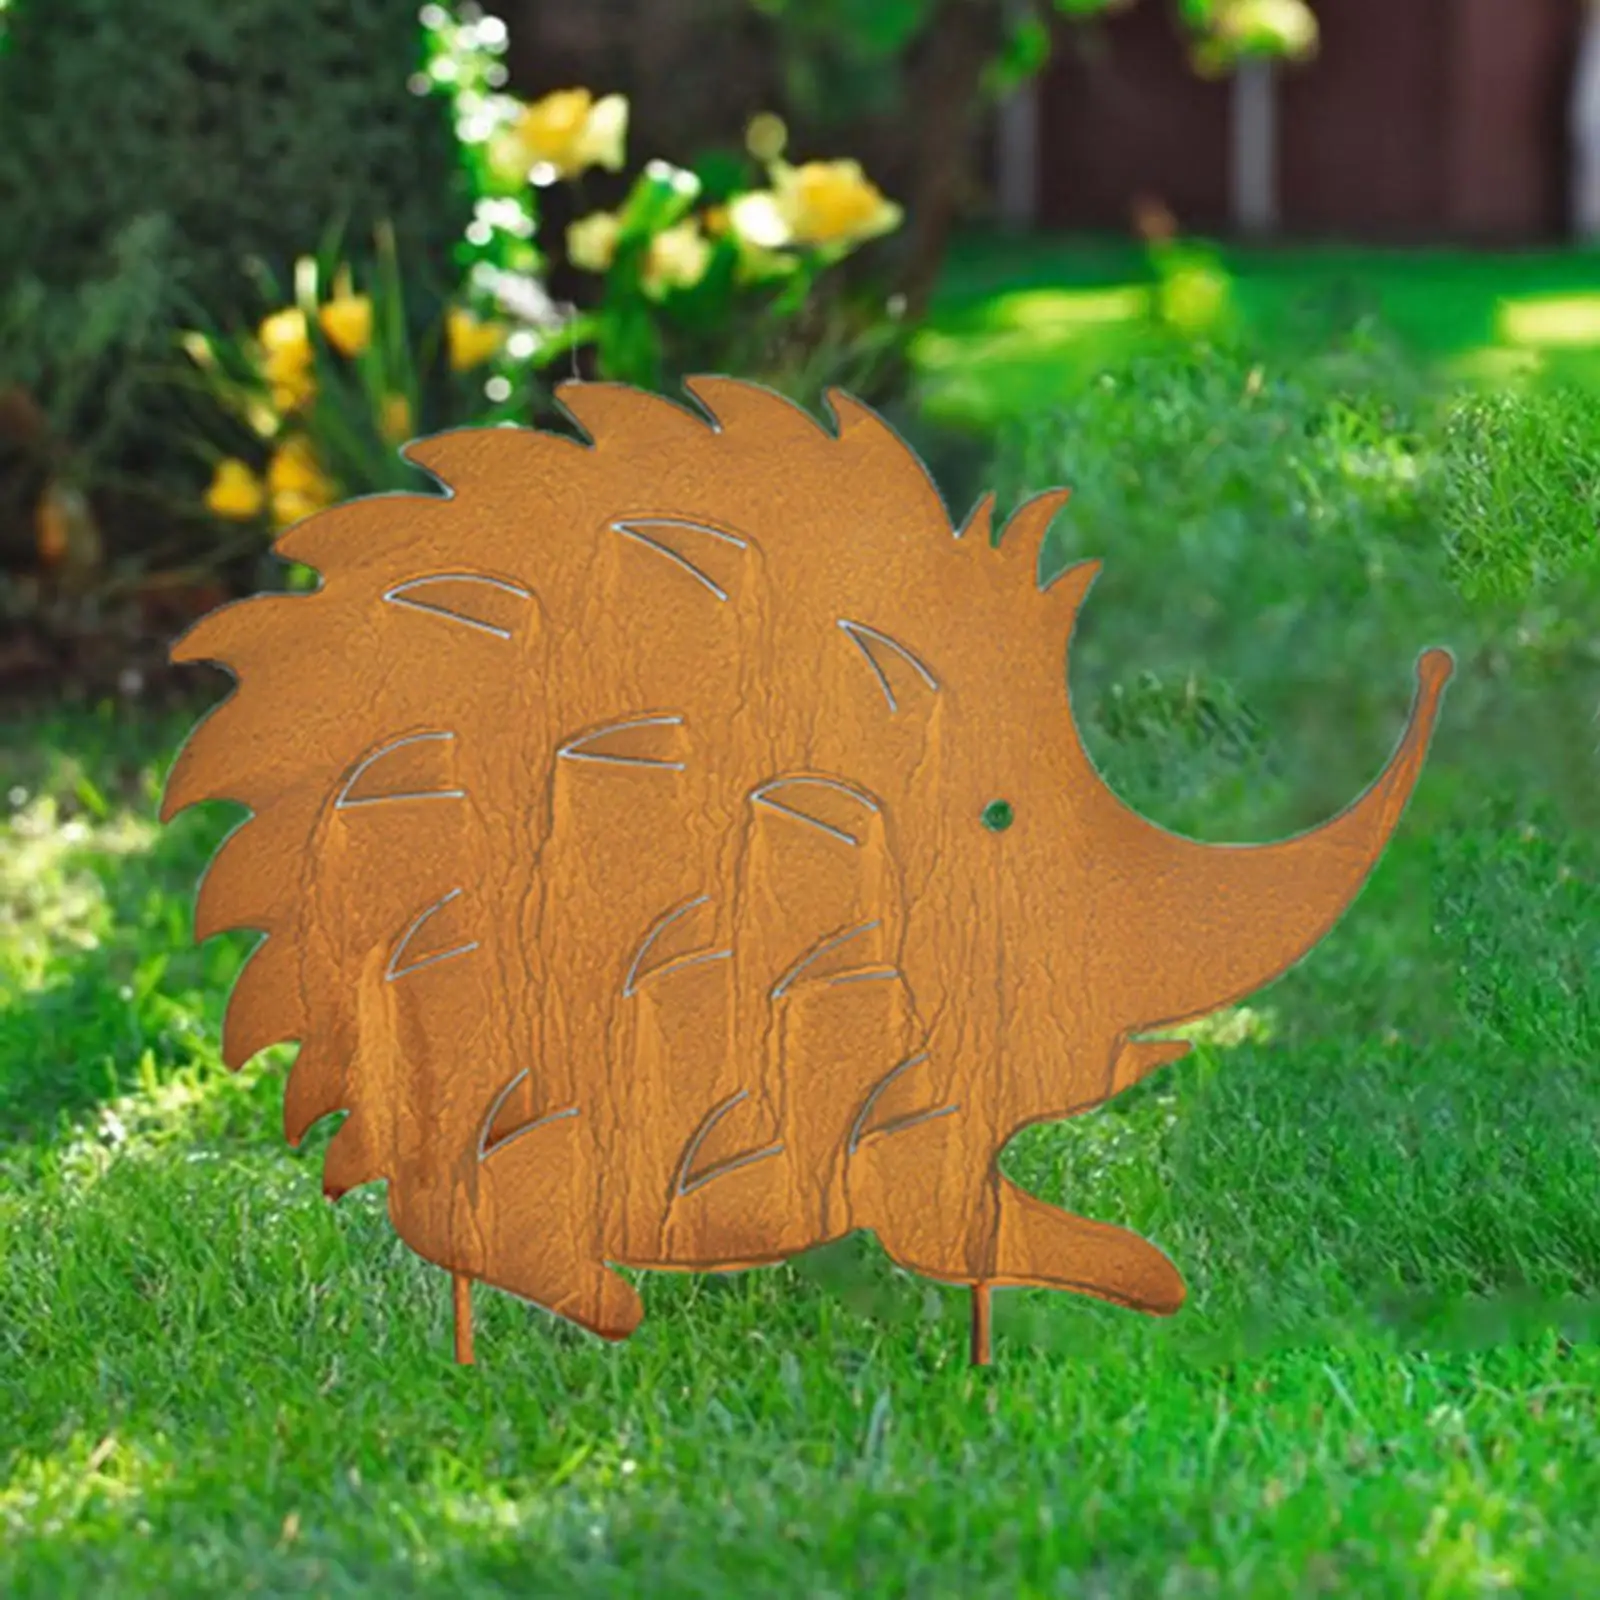 Metal Hedgehogs Animal Yard Stake Animal Silhouette for Outdoor Decorative